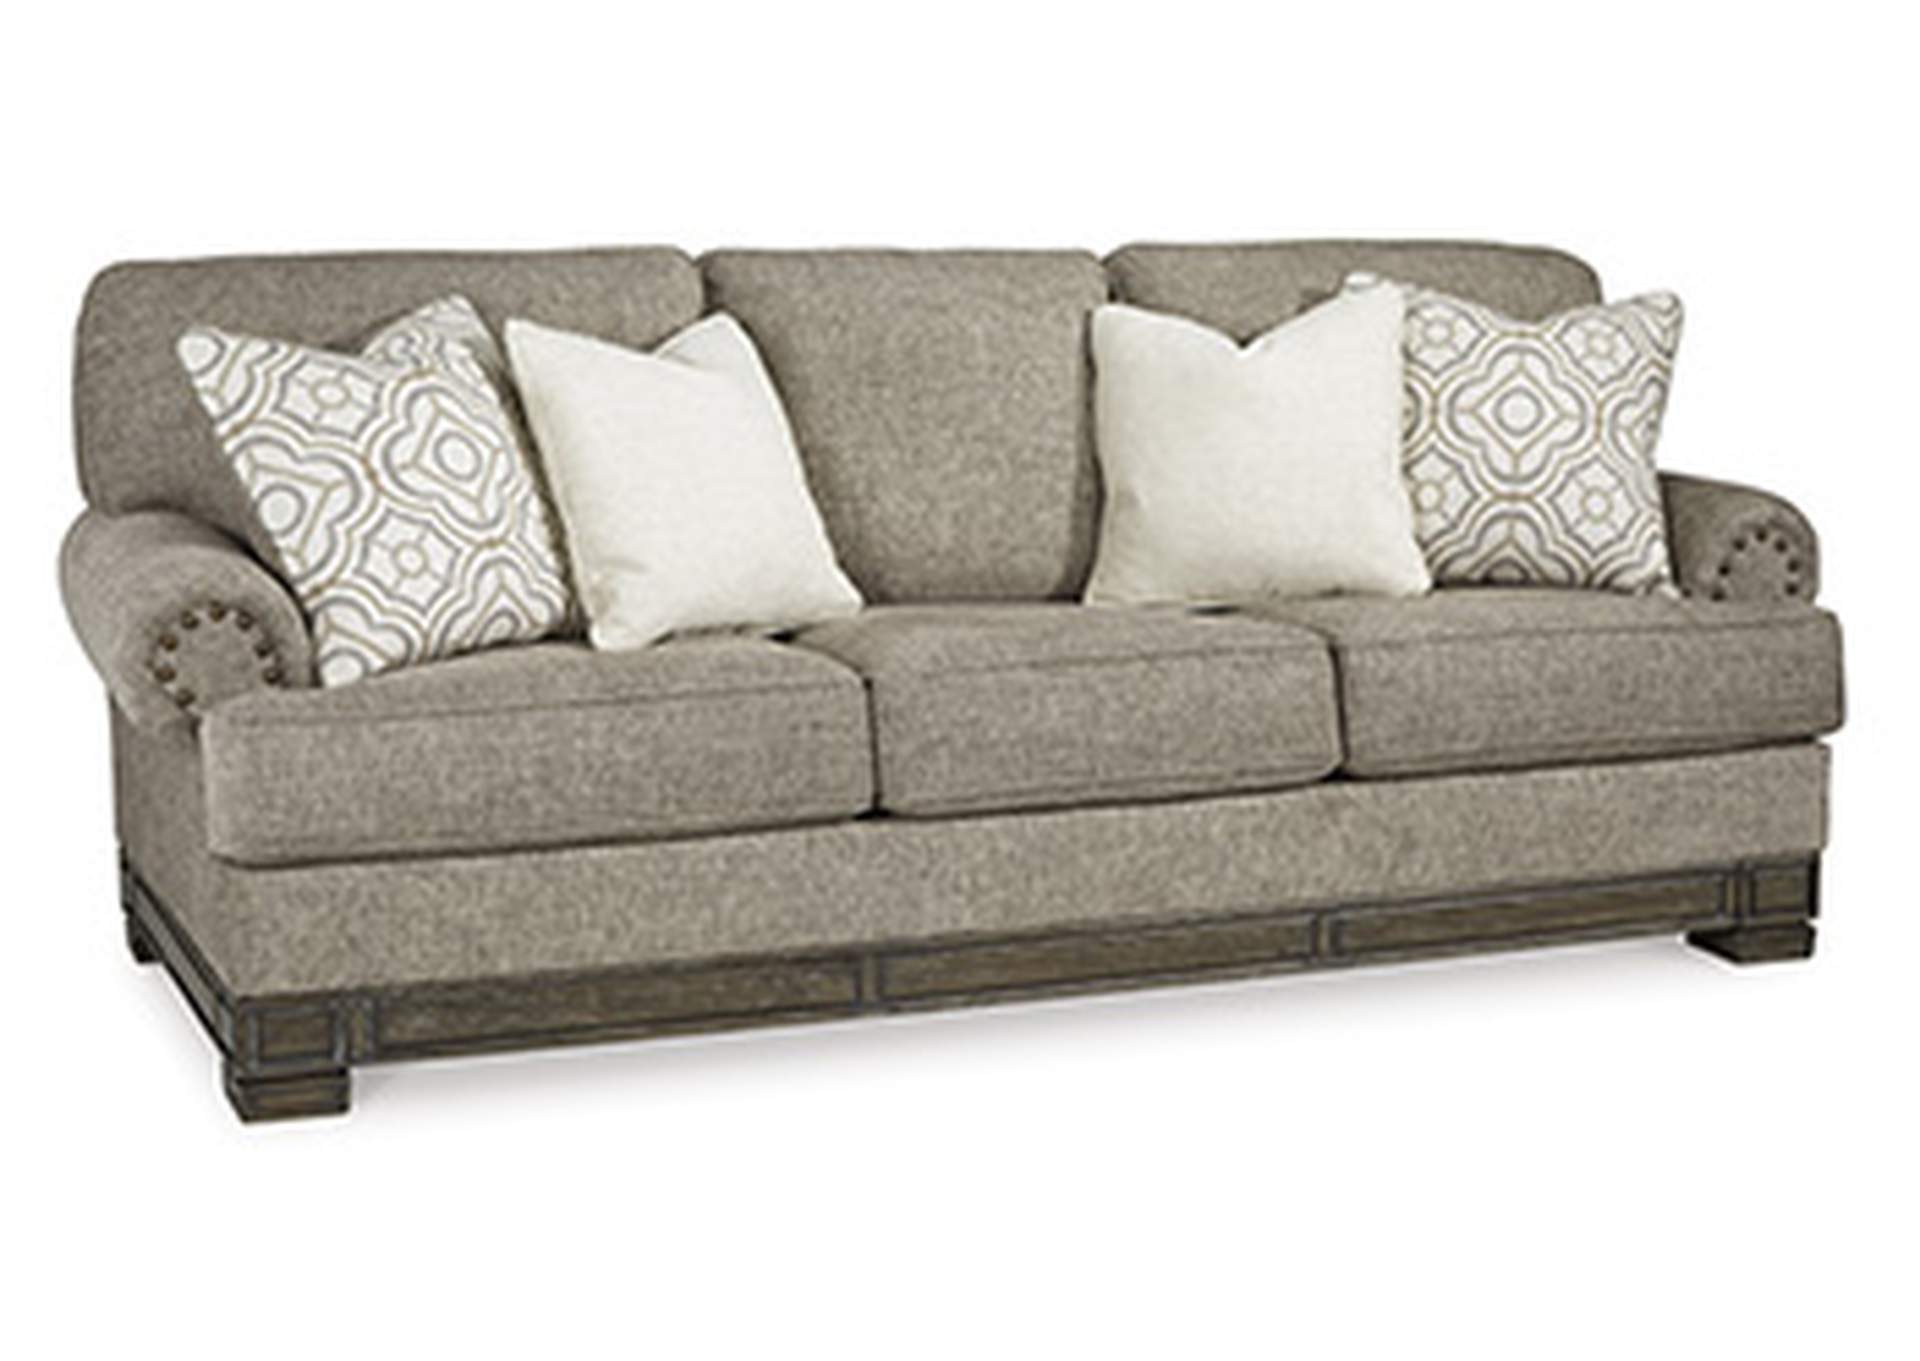 Einsgrove Sofa,Signature Design By Ashley